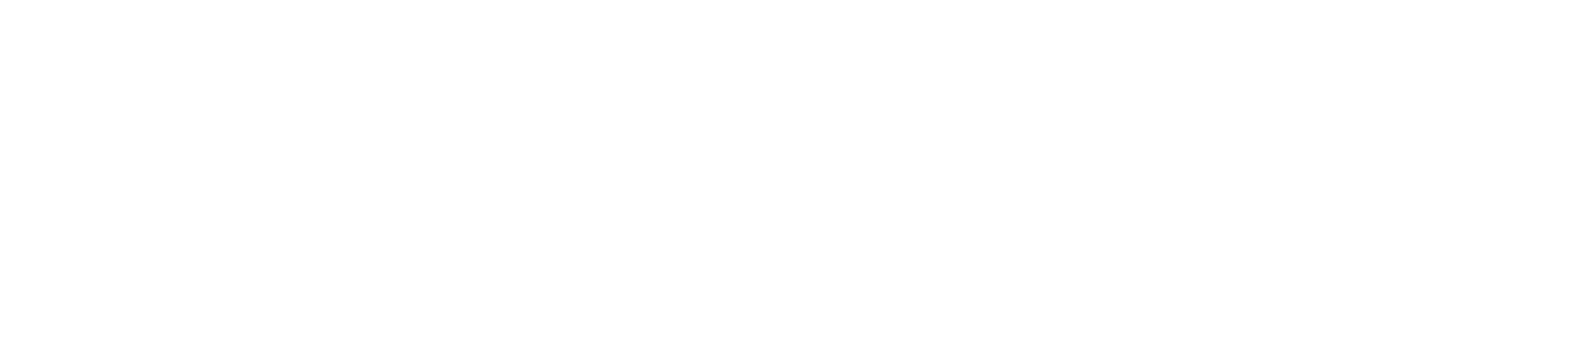 universal standard adidas